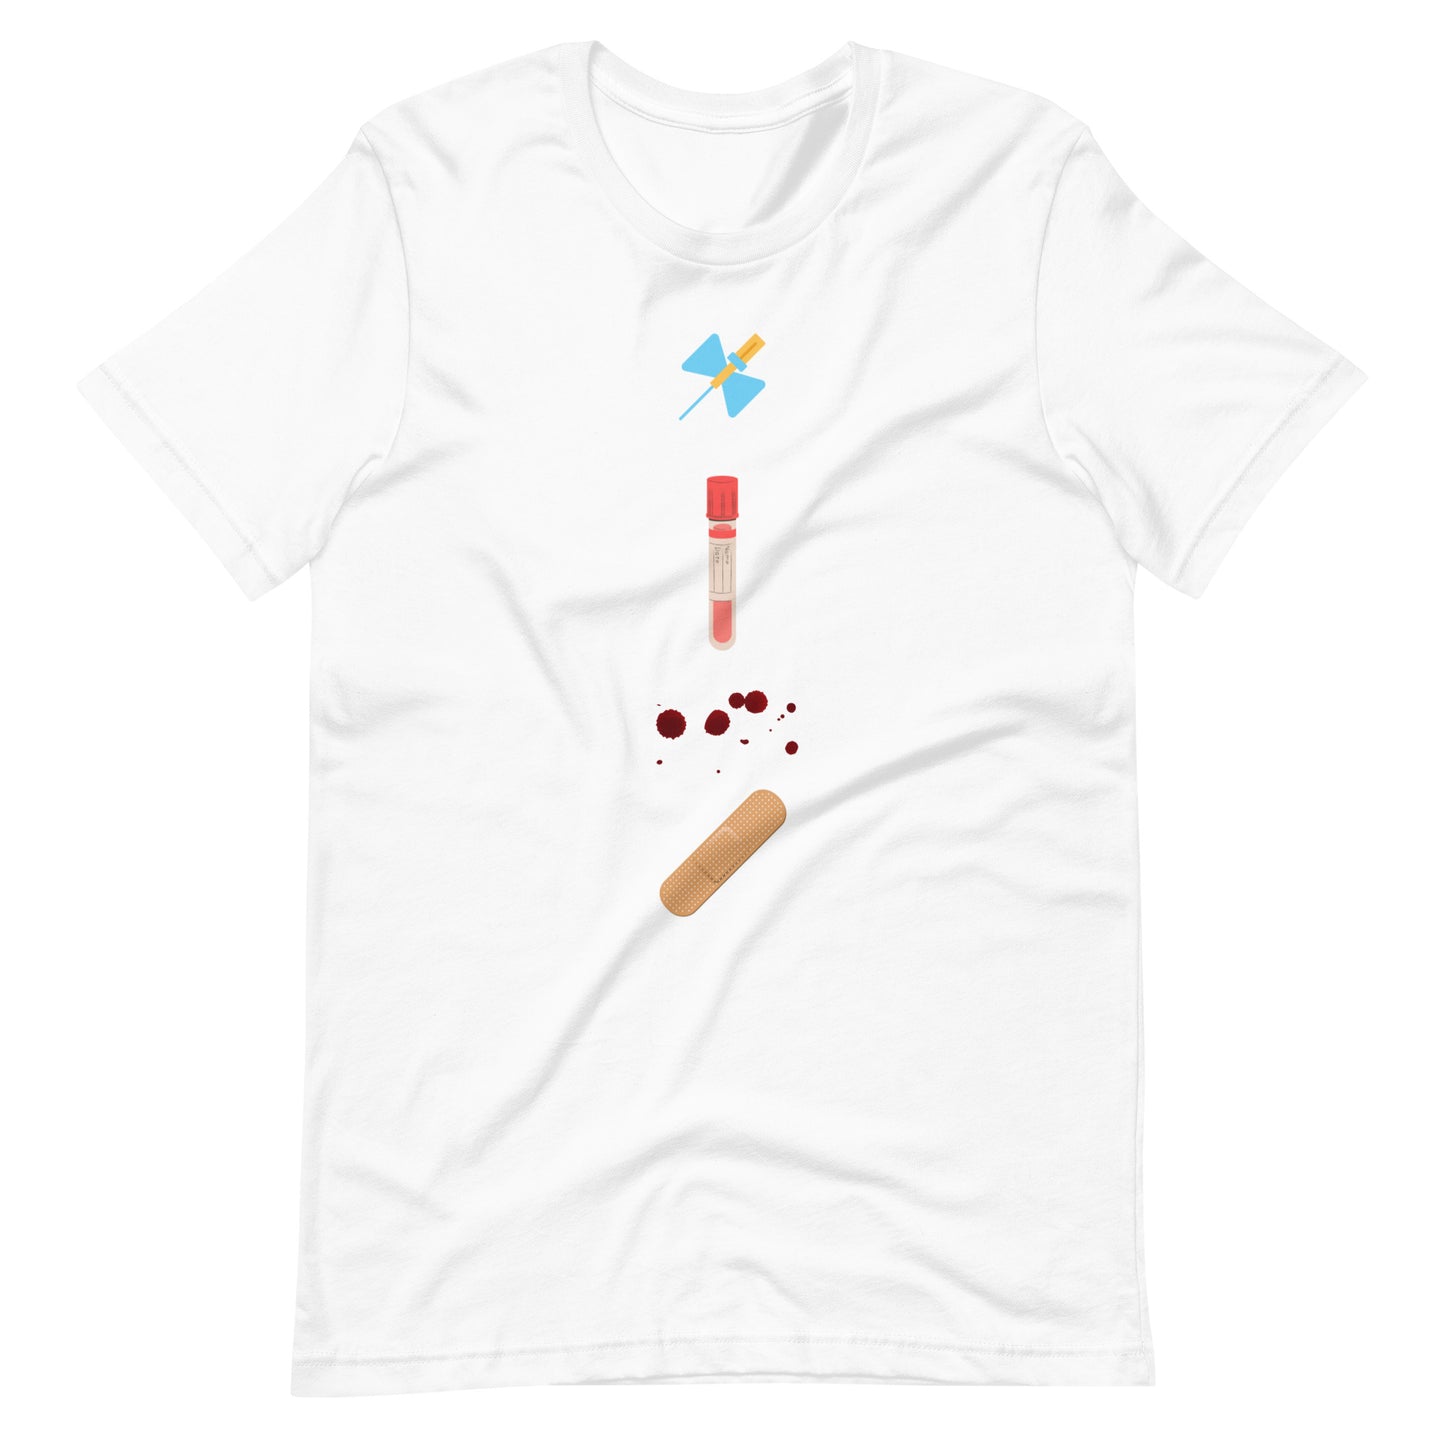 Phlebotomy, Phlebotomist, Blood Draw, Nurse, Medical Student, Doctor, Medical School, Funny Medical T-shirt, Funny Doctor T-shirt